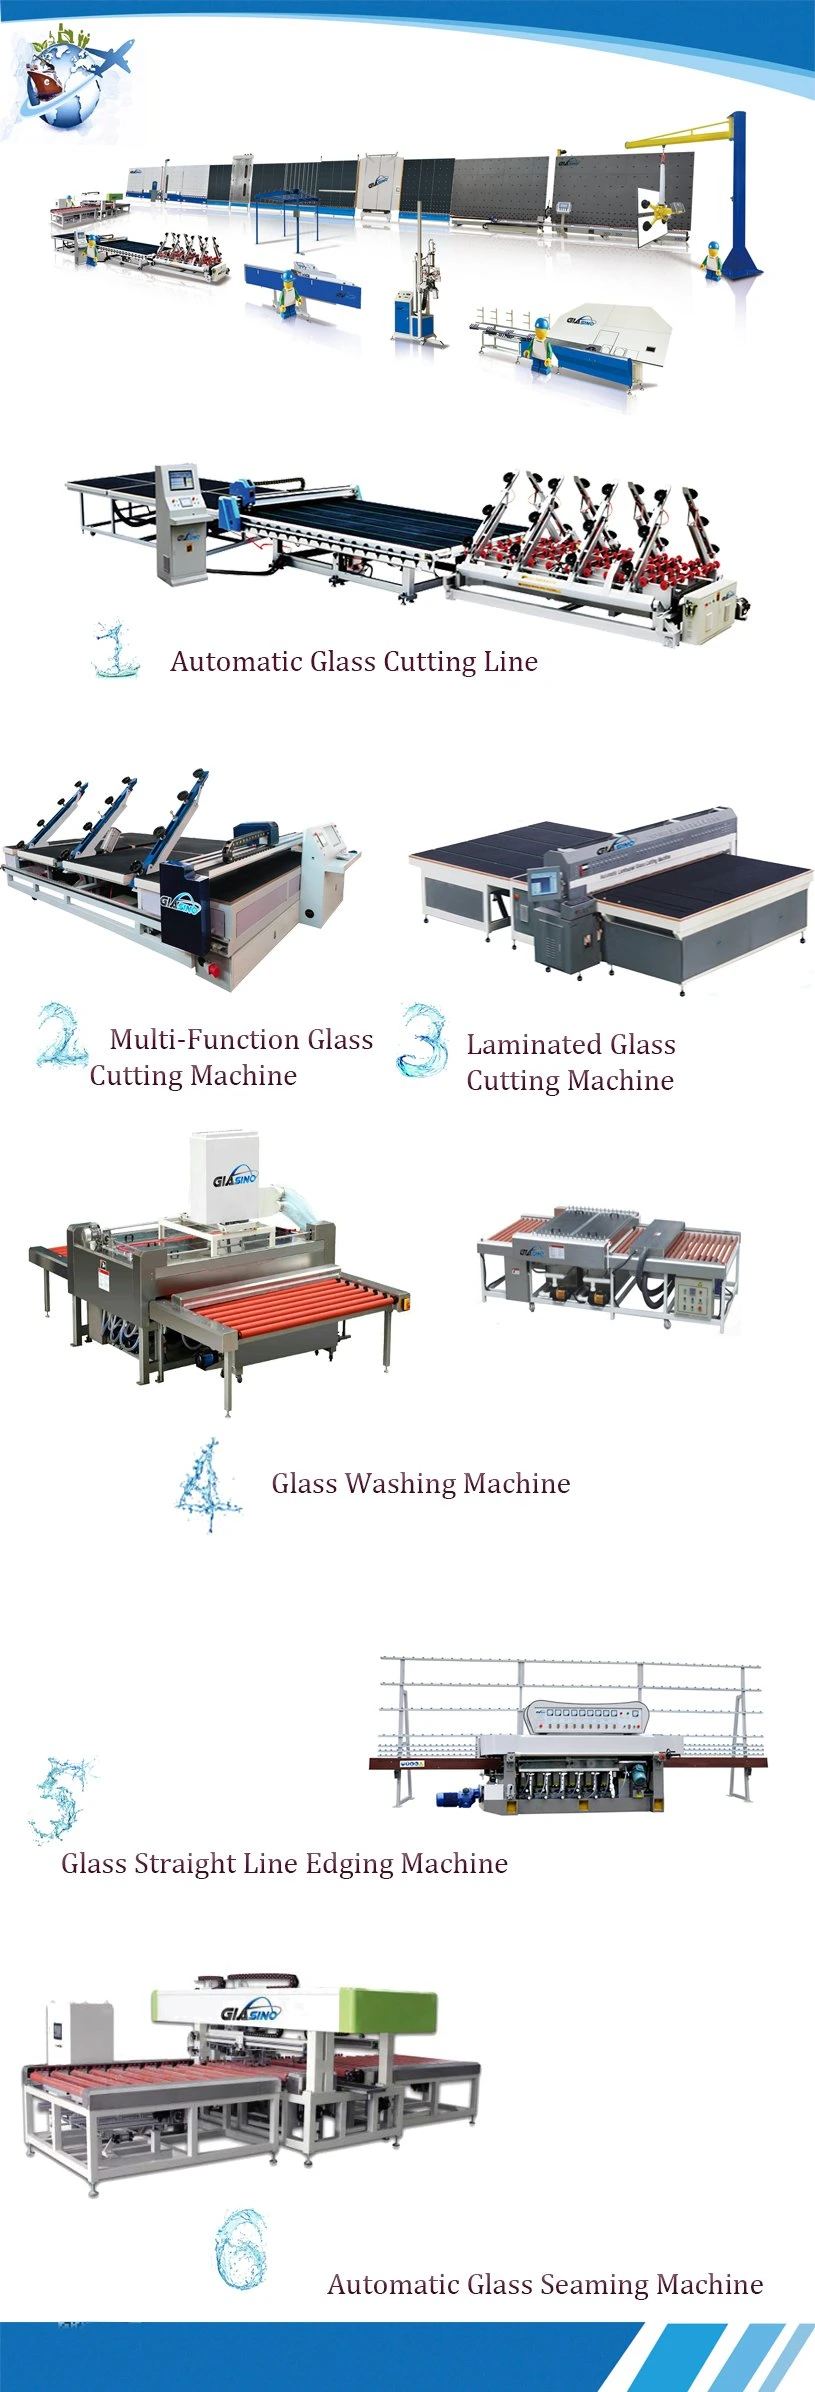 Glass Breaking Table/Glass Breaking Machine/Glass Breaker/Glass Air Breaking Machine